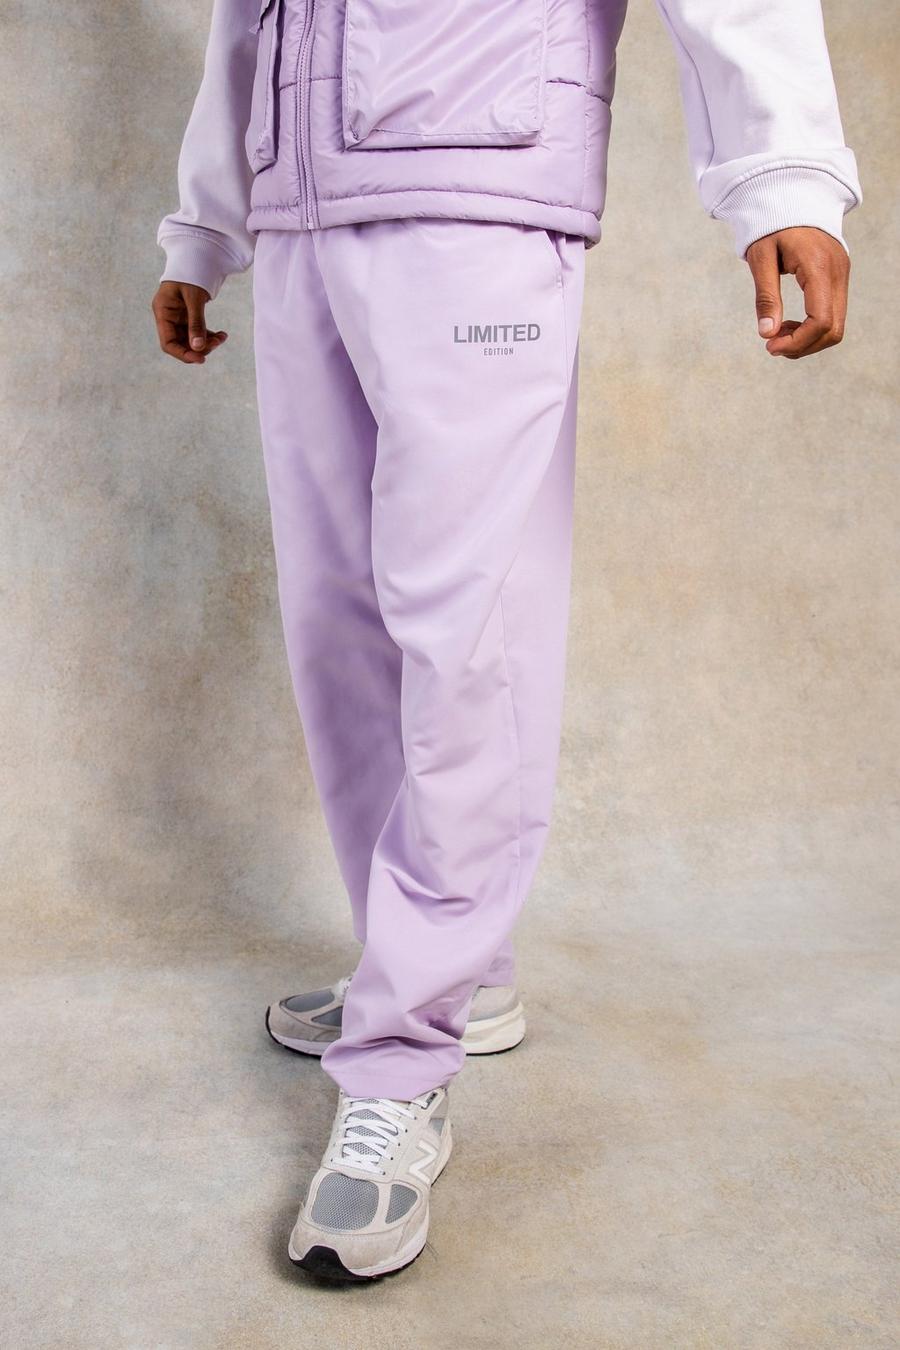 Lilac purple מכנסיים בגזרה ישרה מבד עמיד בצבע אפרסק עם כיתוב Limited